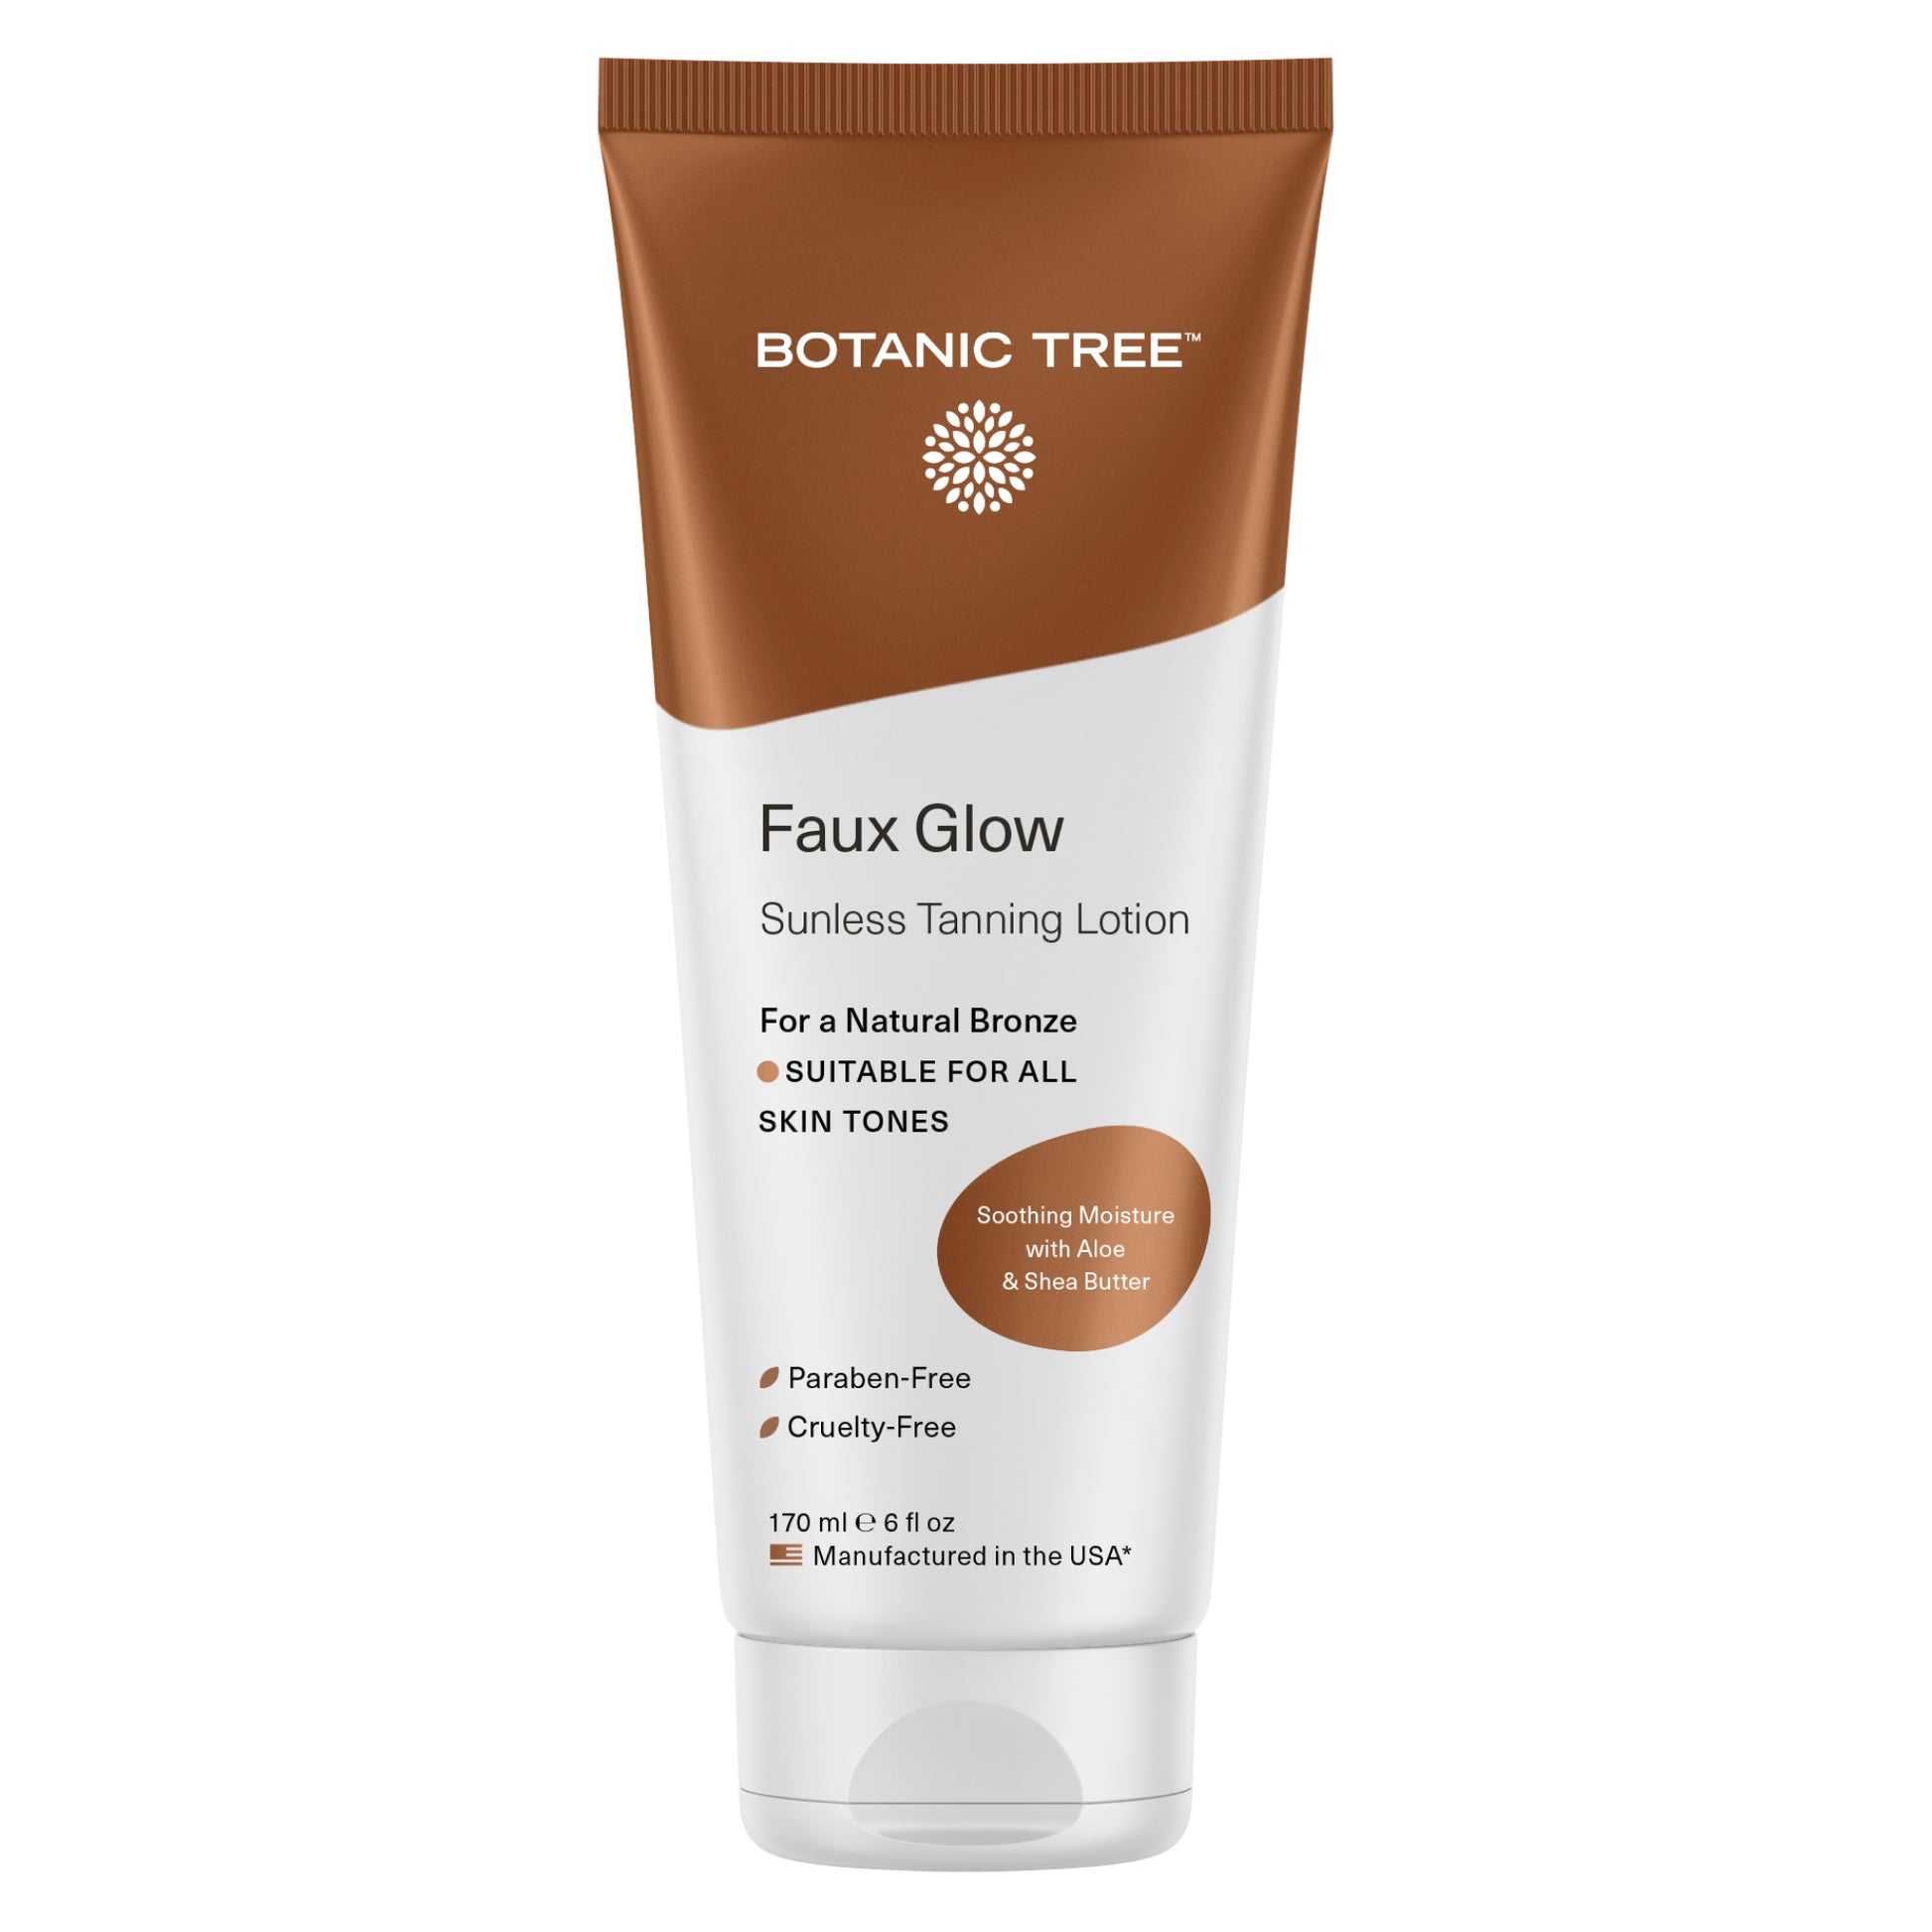 Botanic Tree self tanner lotion